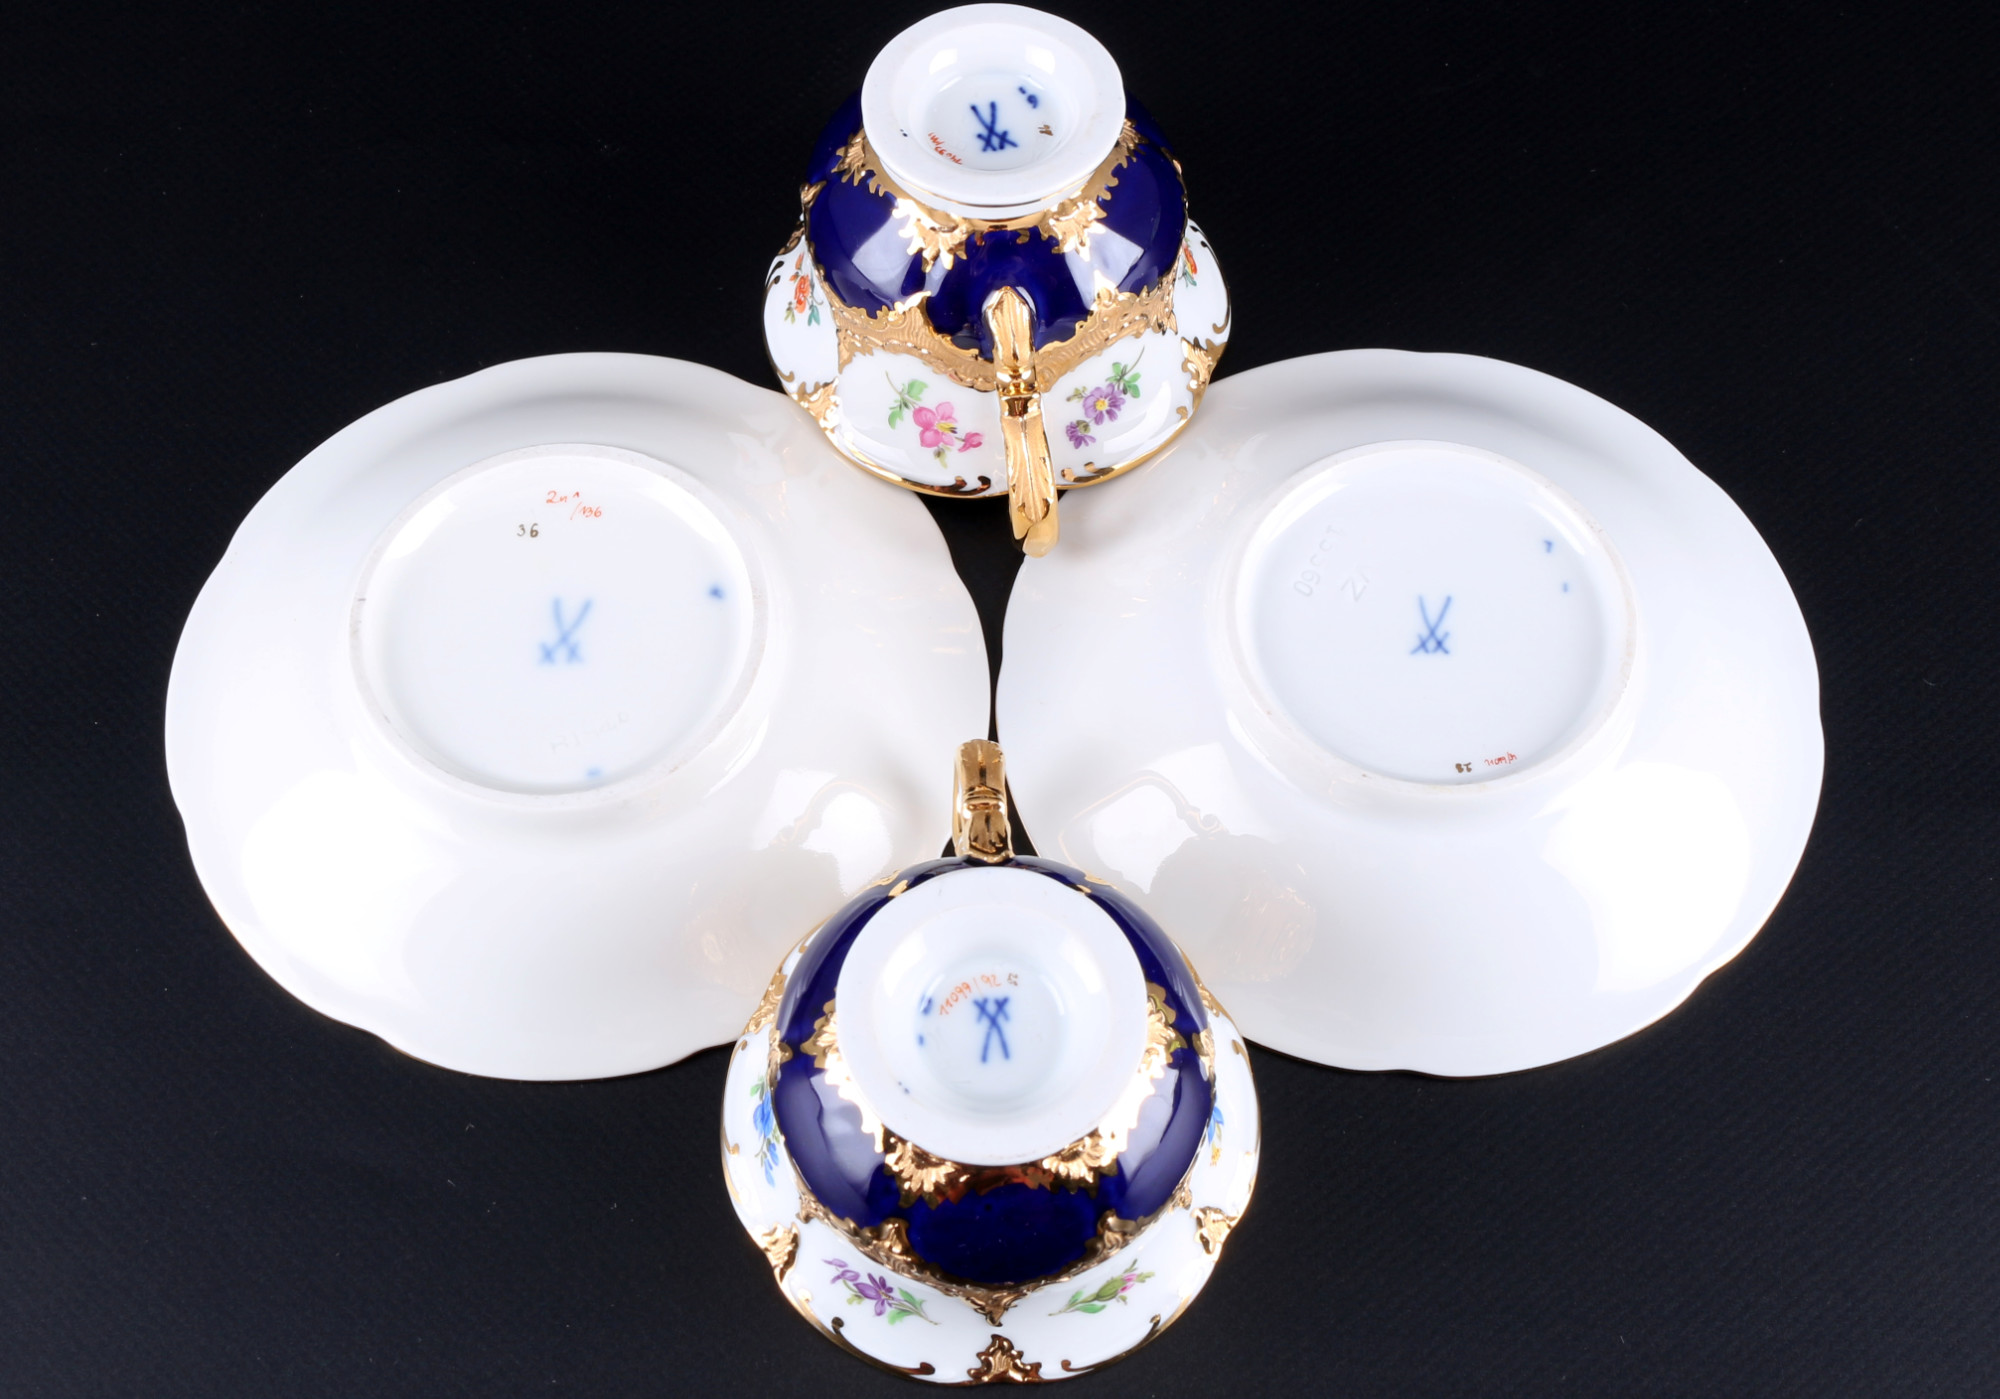 Meissen B-Form Strewn Flowers royal blue 2 mocha coffee cups with saucers, Mokkatassen, - Image 4 of 4